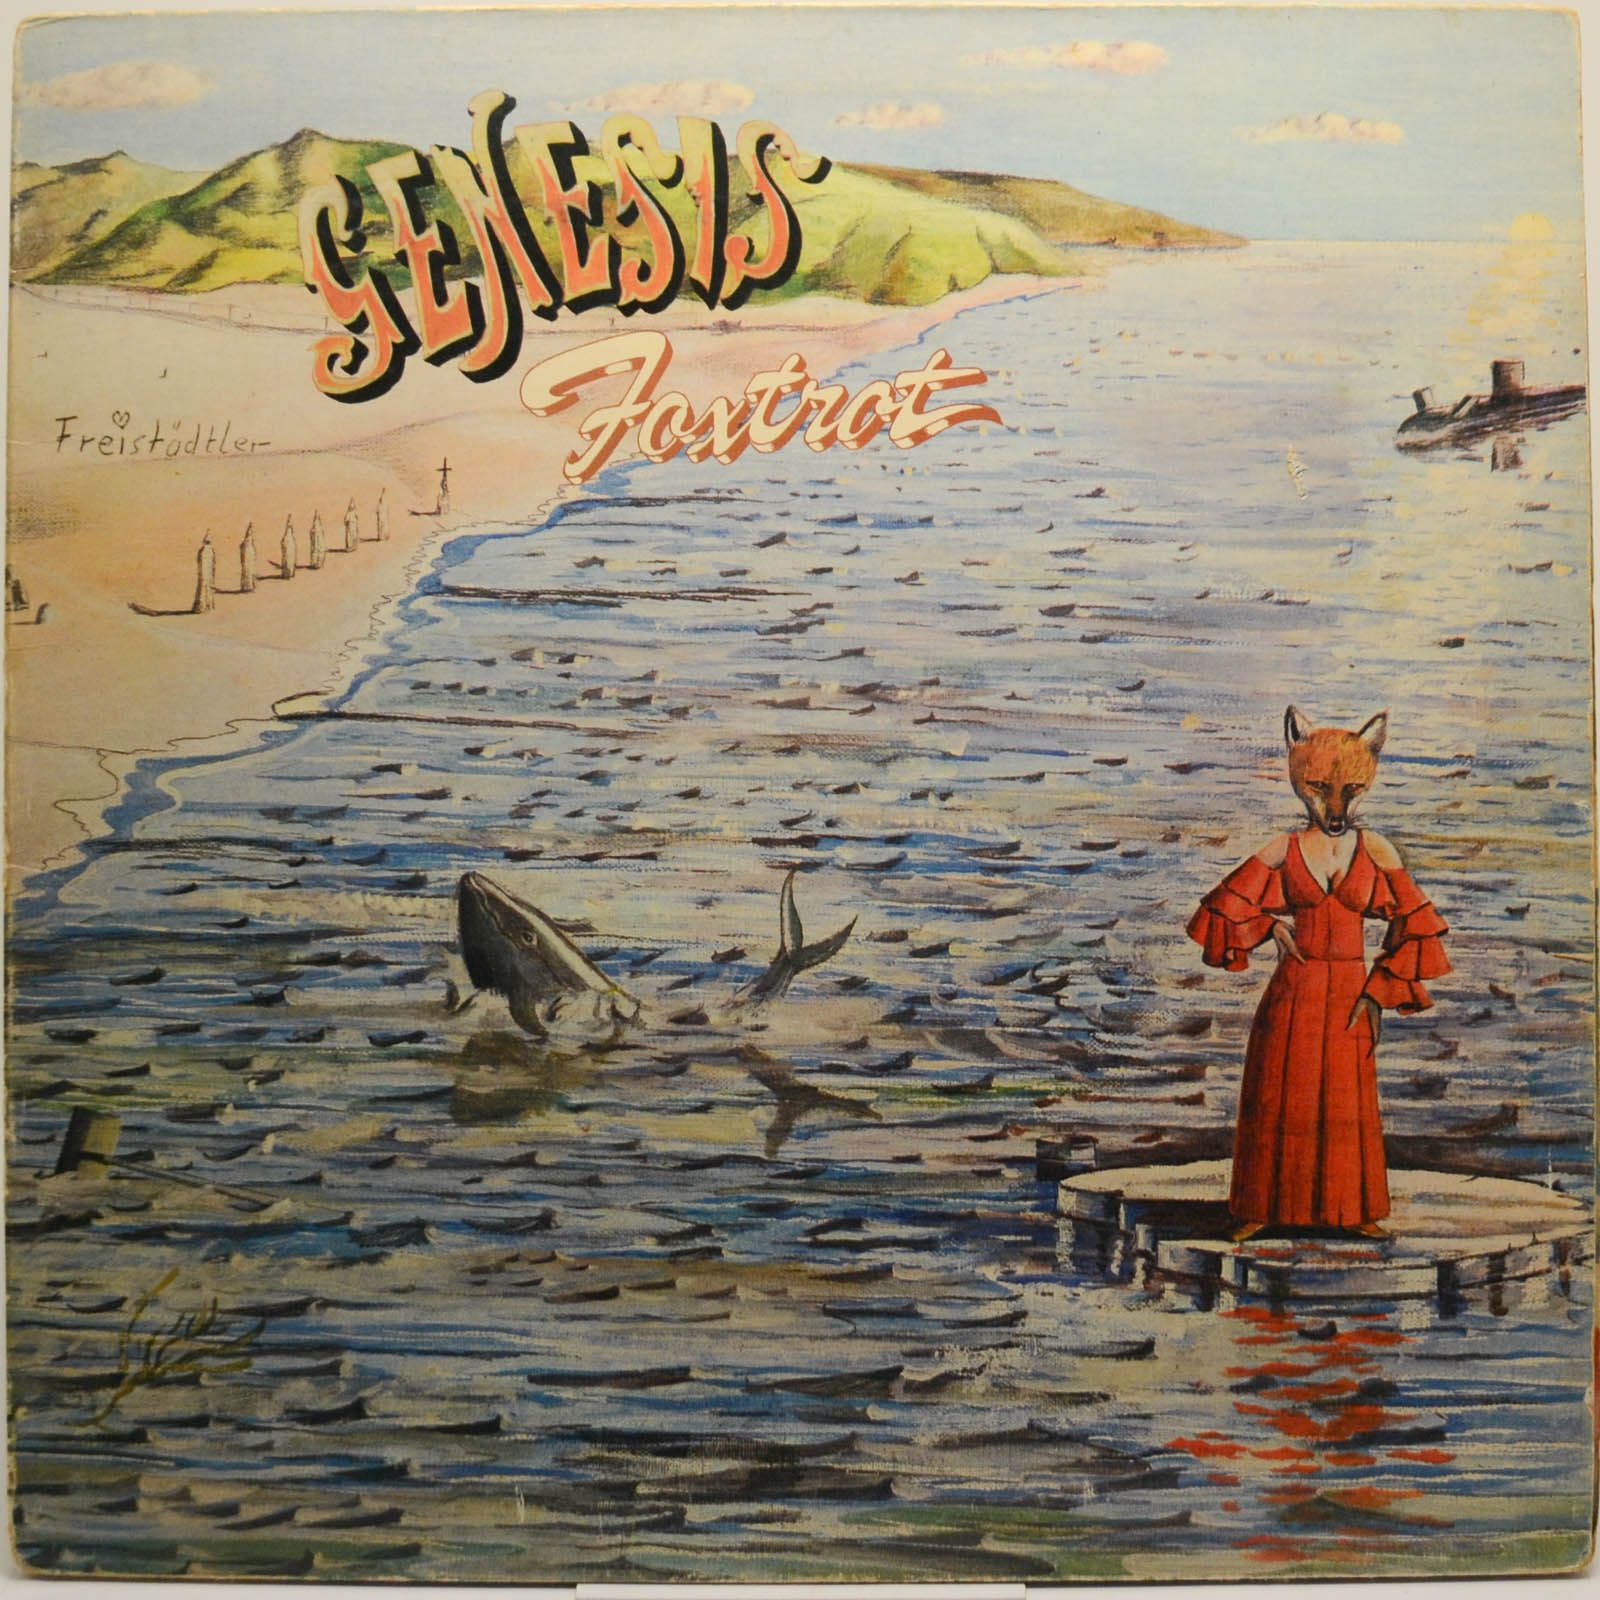 Genesis — Foxtrot (UK), 1972